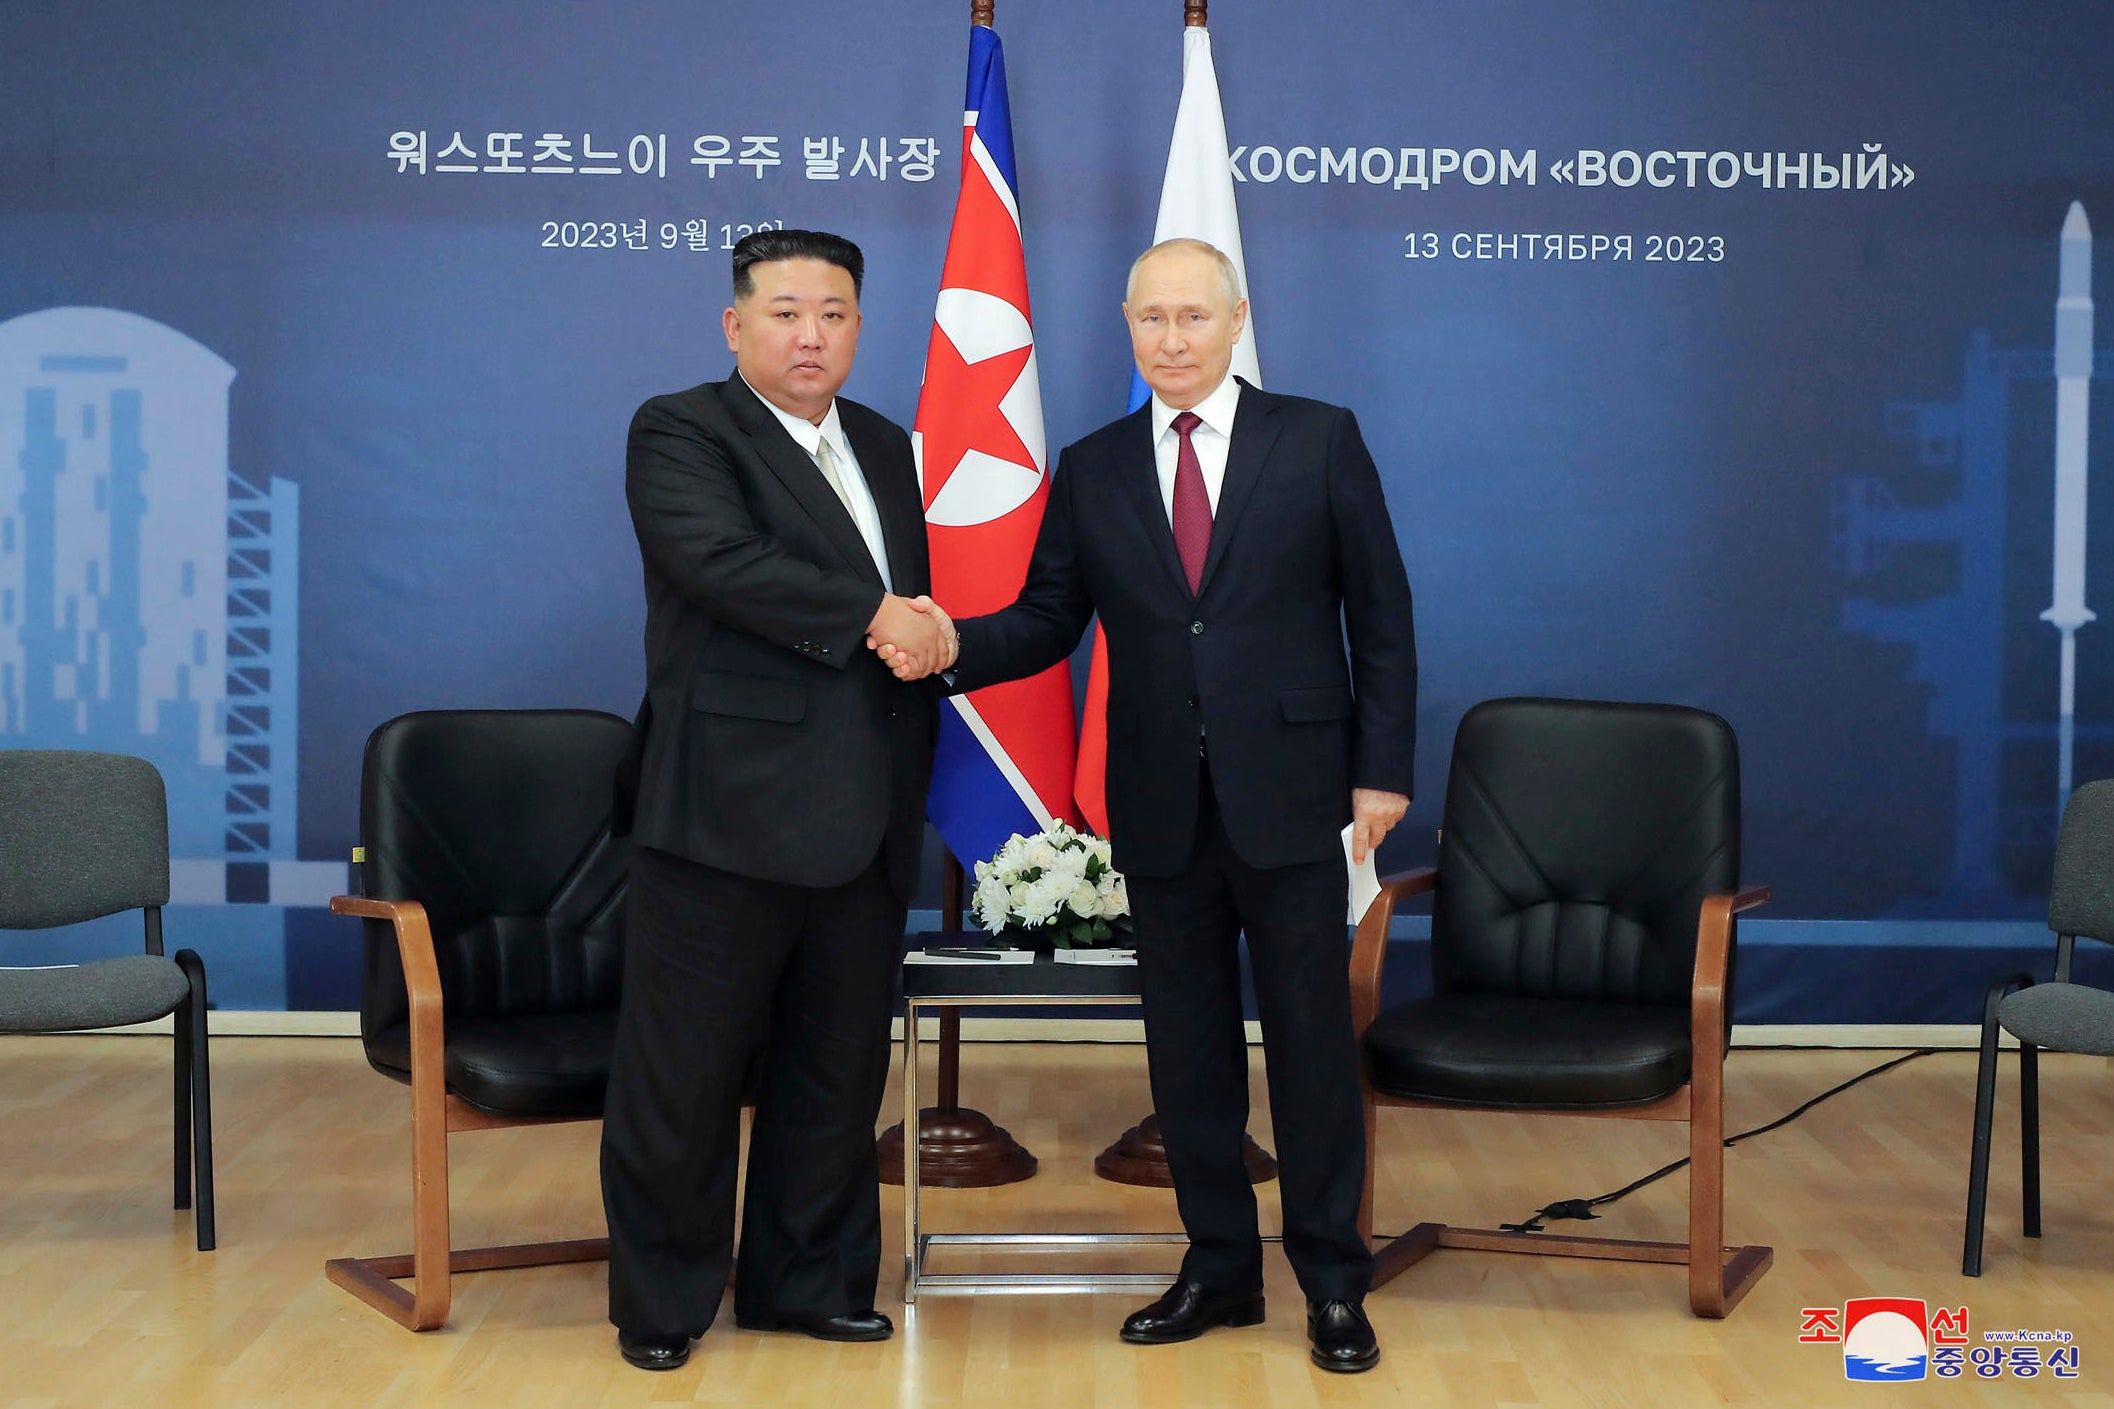 Kim Jong-un and Vladimir Putin at the Vostochny cosmodrome in September 2023